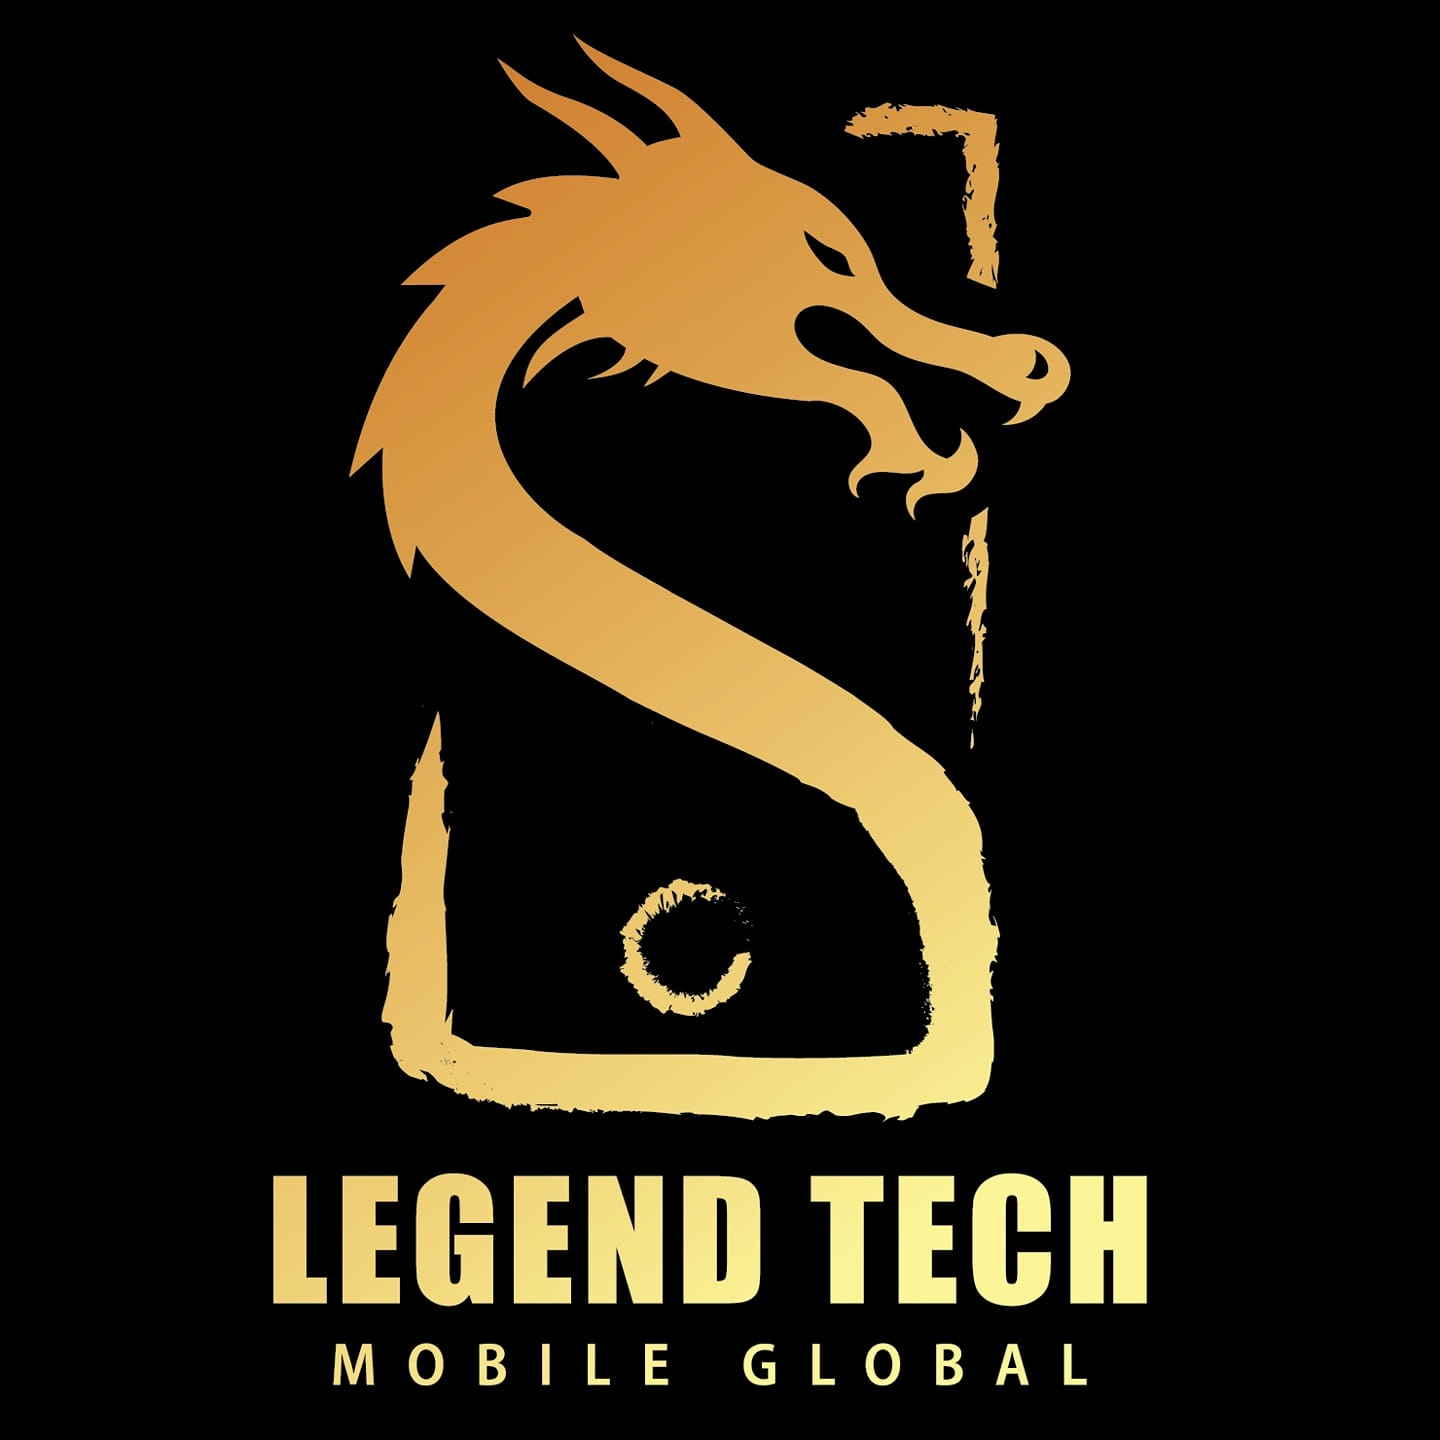 Legend Tech Mobile Global